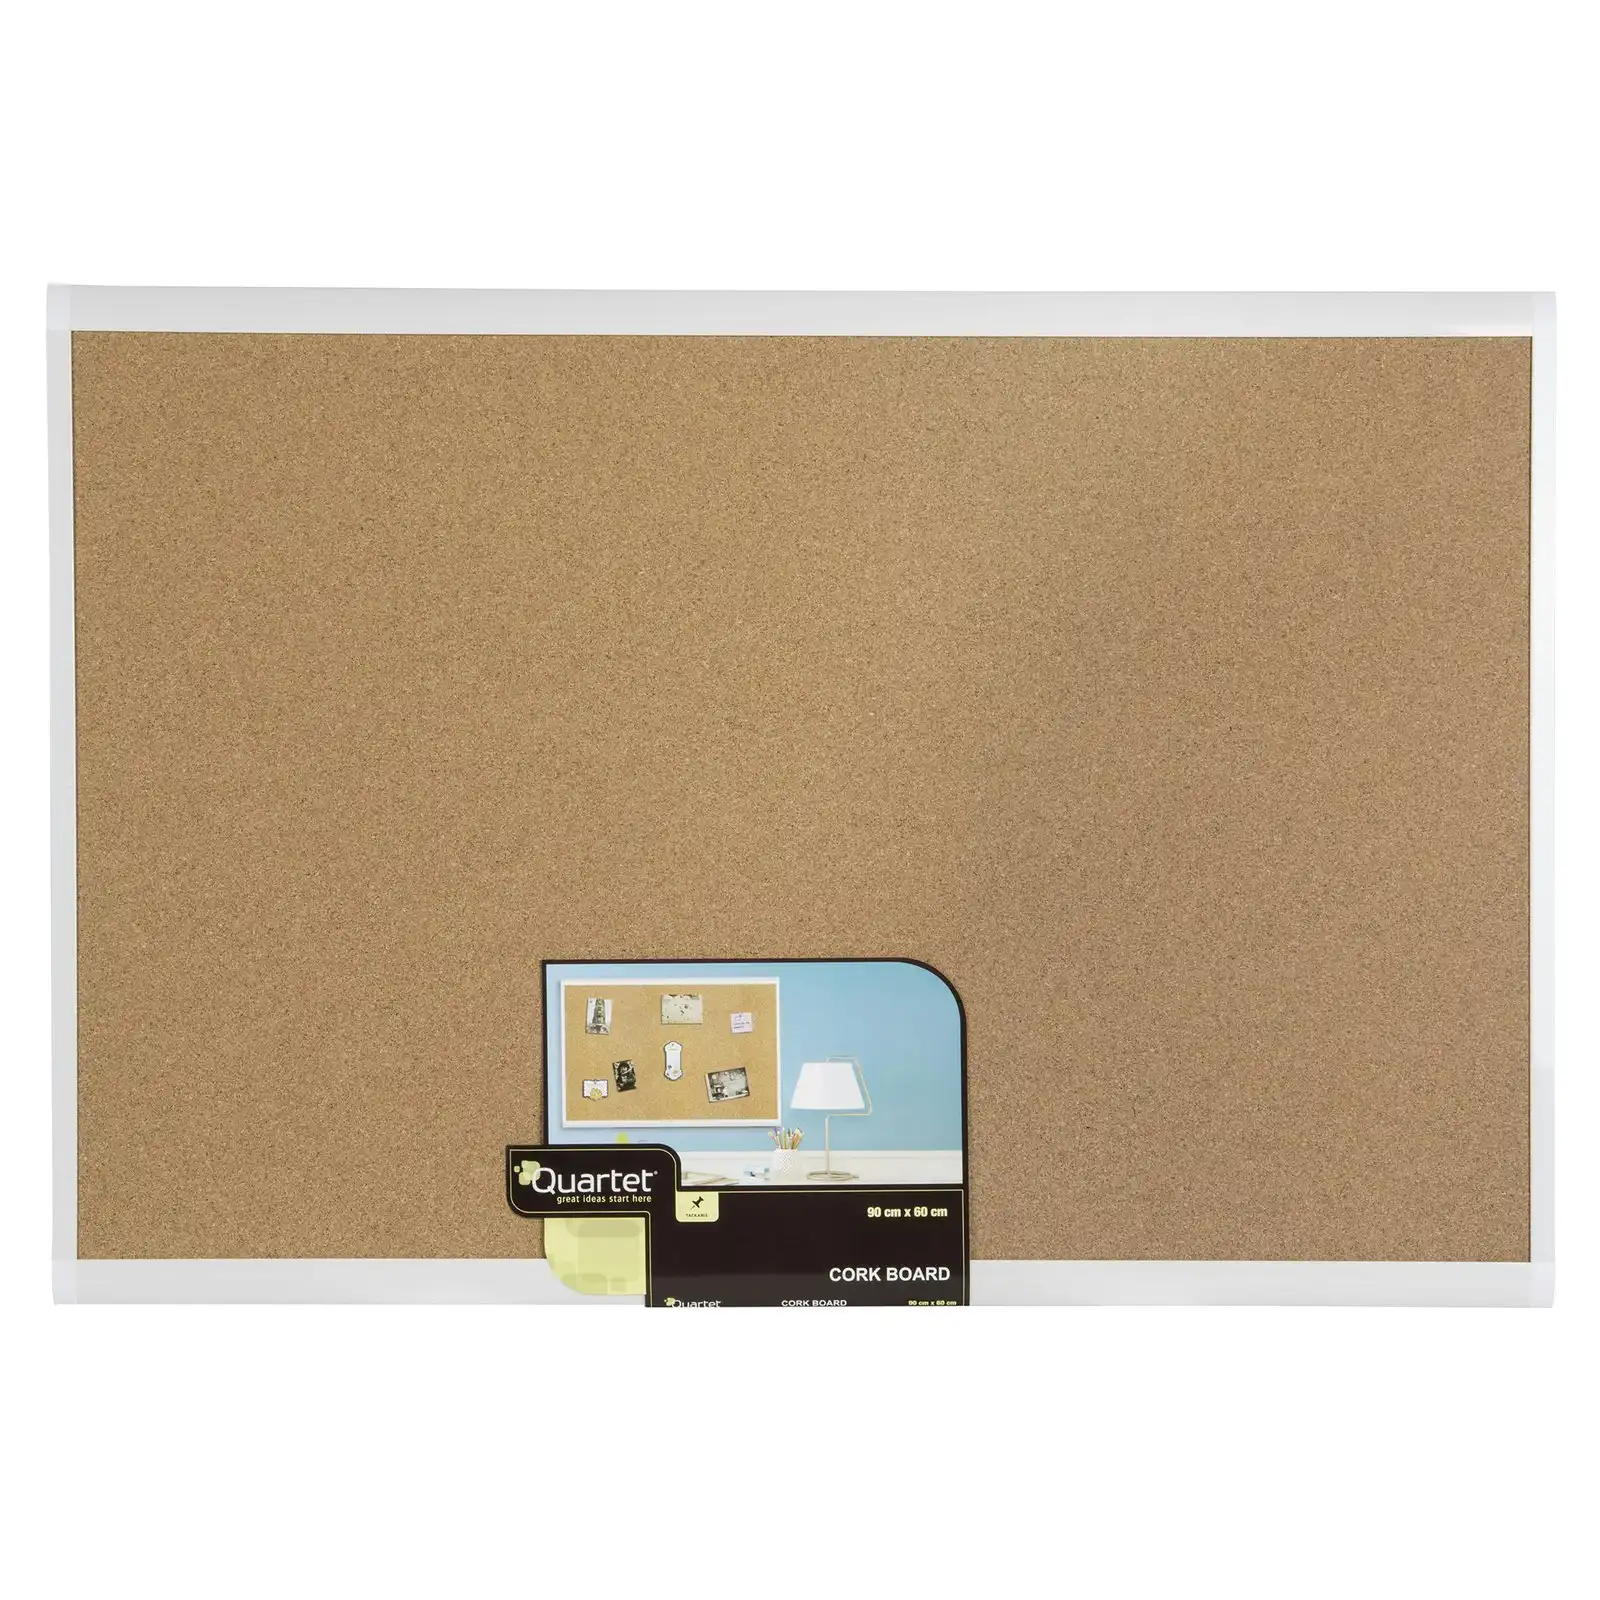 Quart Basics 90x60cm Corkboard Wall Hanging Display Bulletin Pin Board Natural